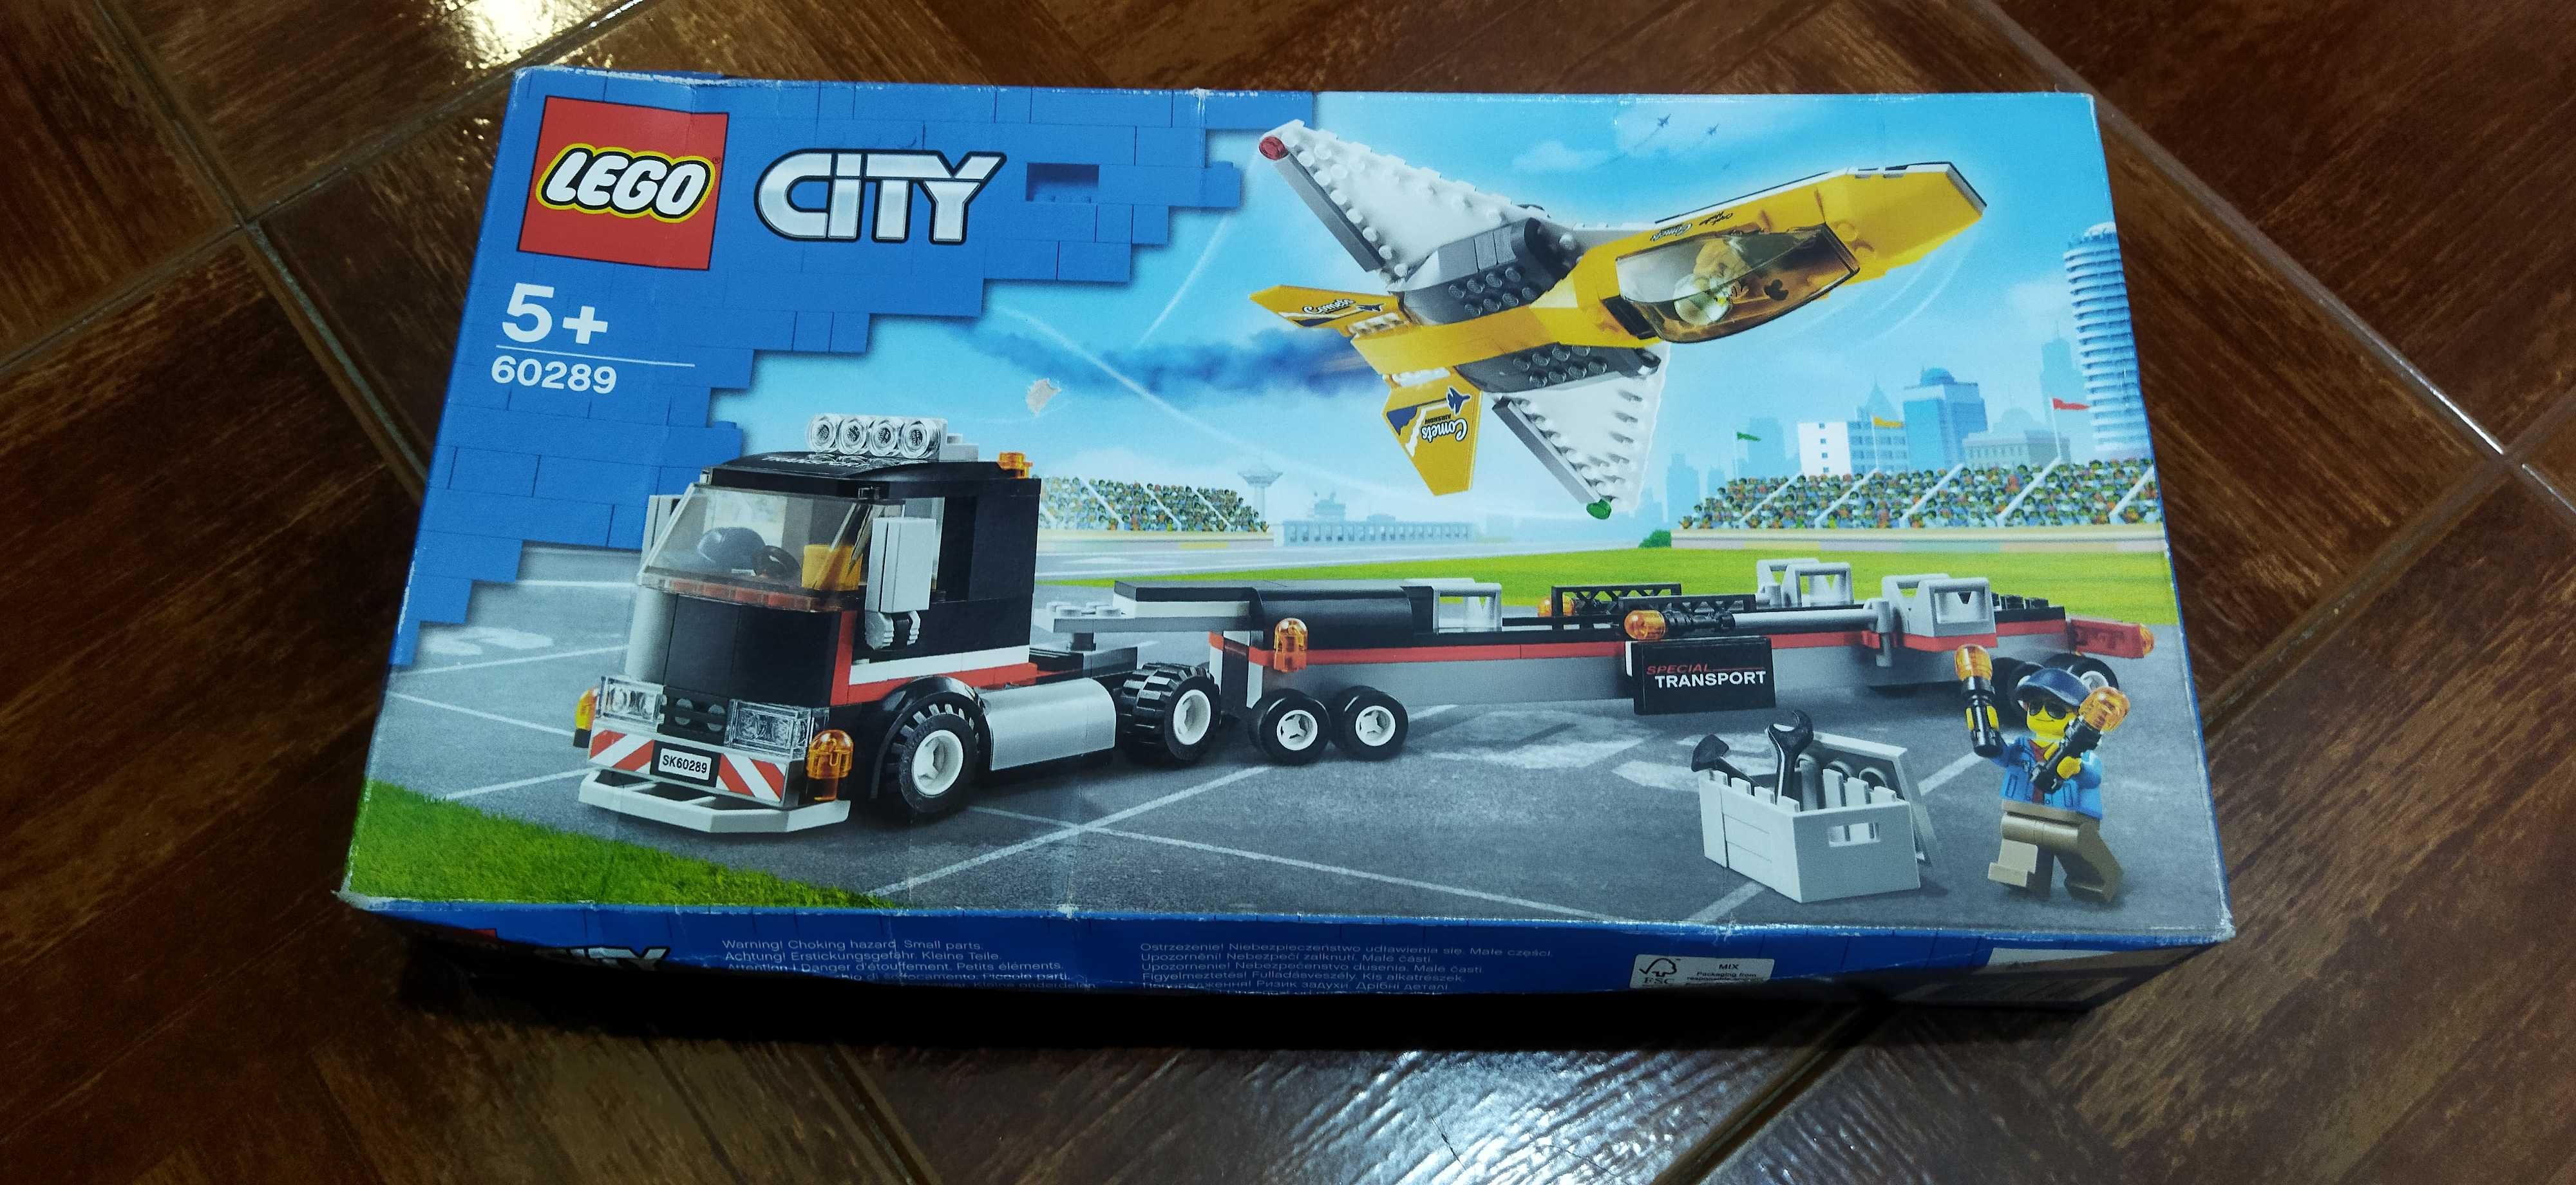 60289 Lego City - Airshow Jet Transporter